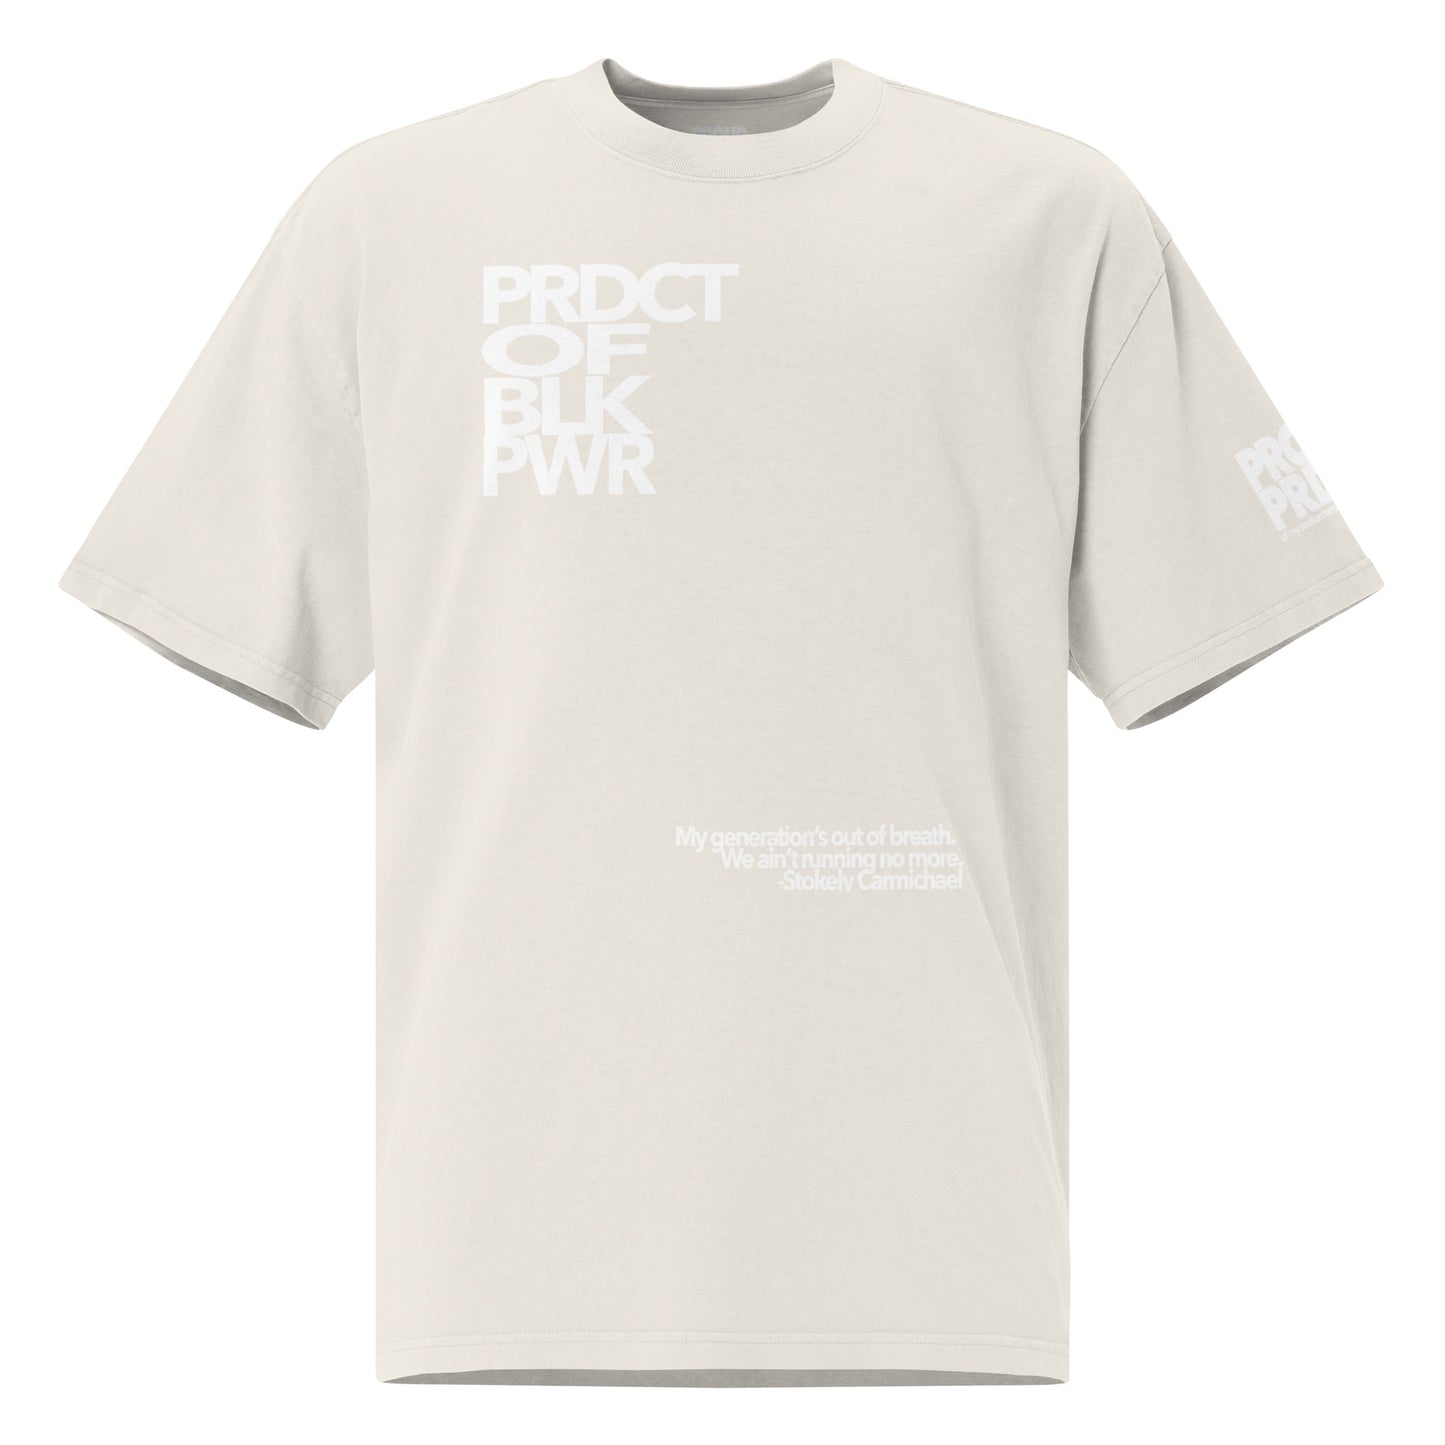 "Product of Black Power" Oversized t-shirt